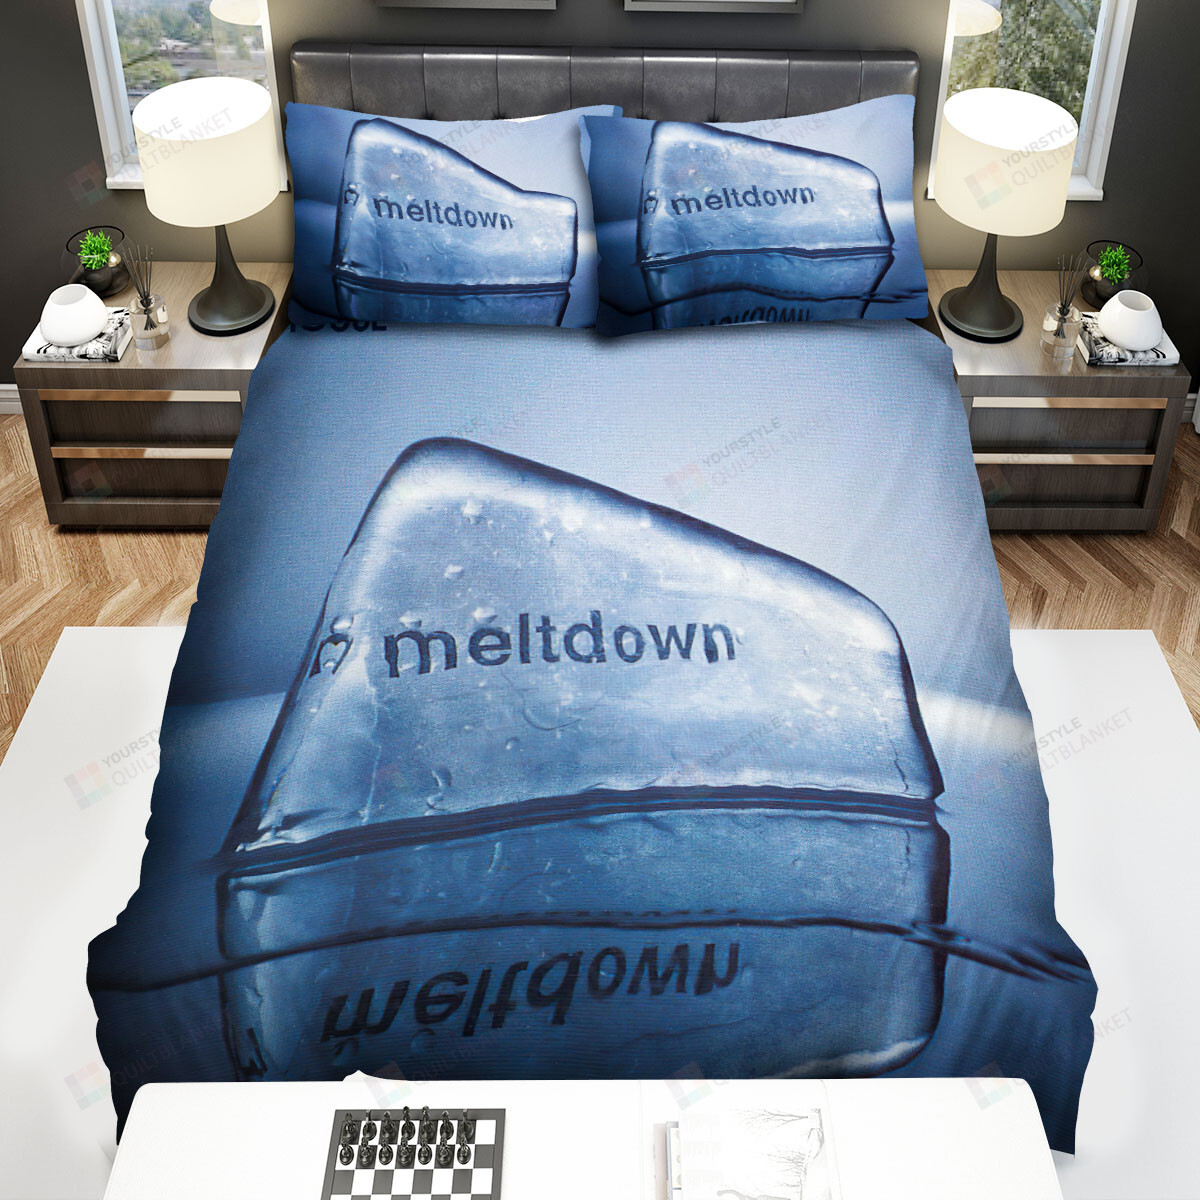 Meltdown Icehouse Bed Sheets Spread Comforter Duvet Cover Bedding Sets